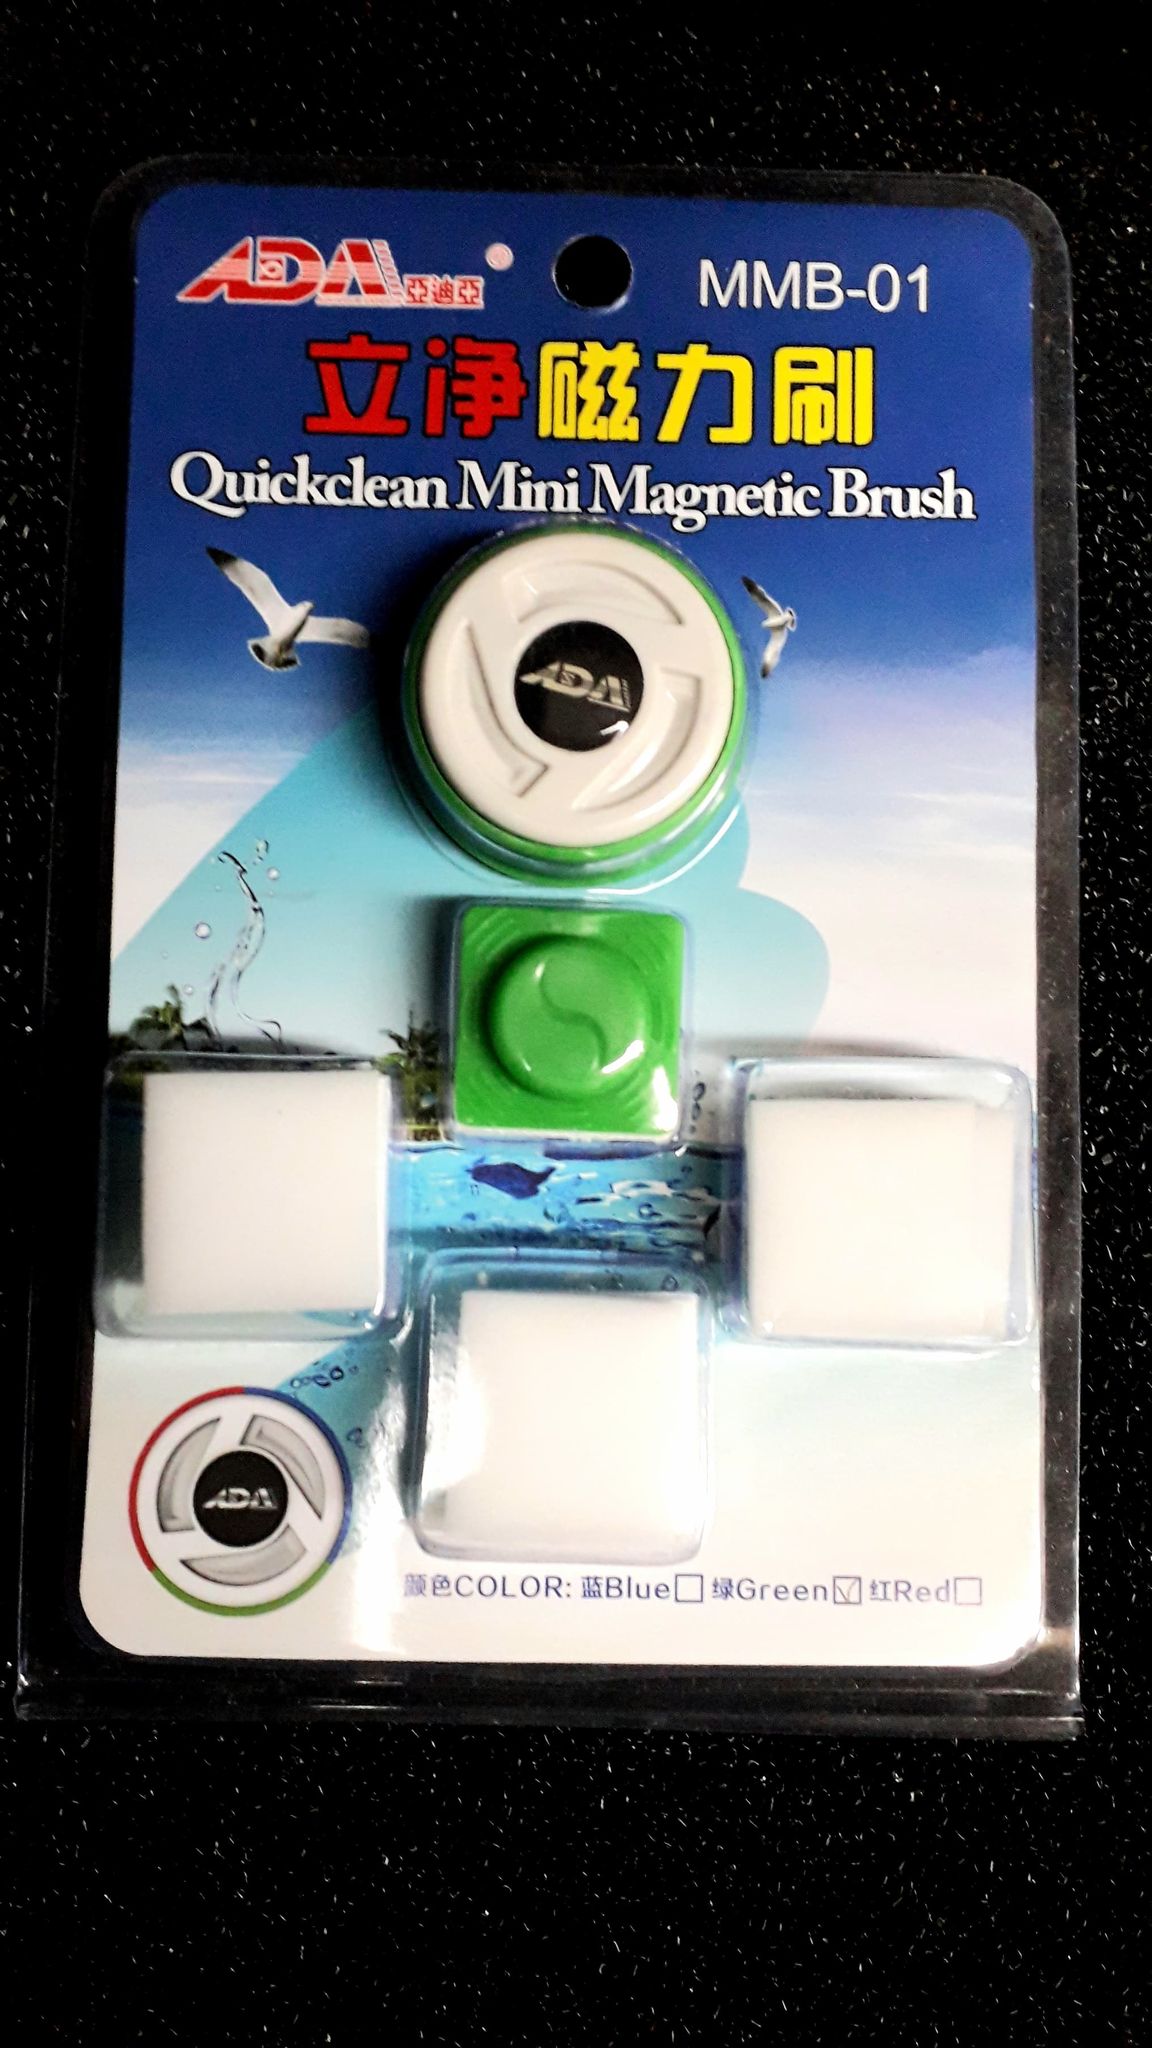 Nam châm cọ bể Quickclean Mini Magnetic Brush MMB-01